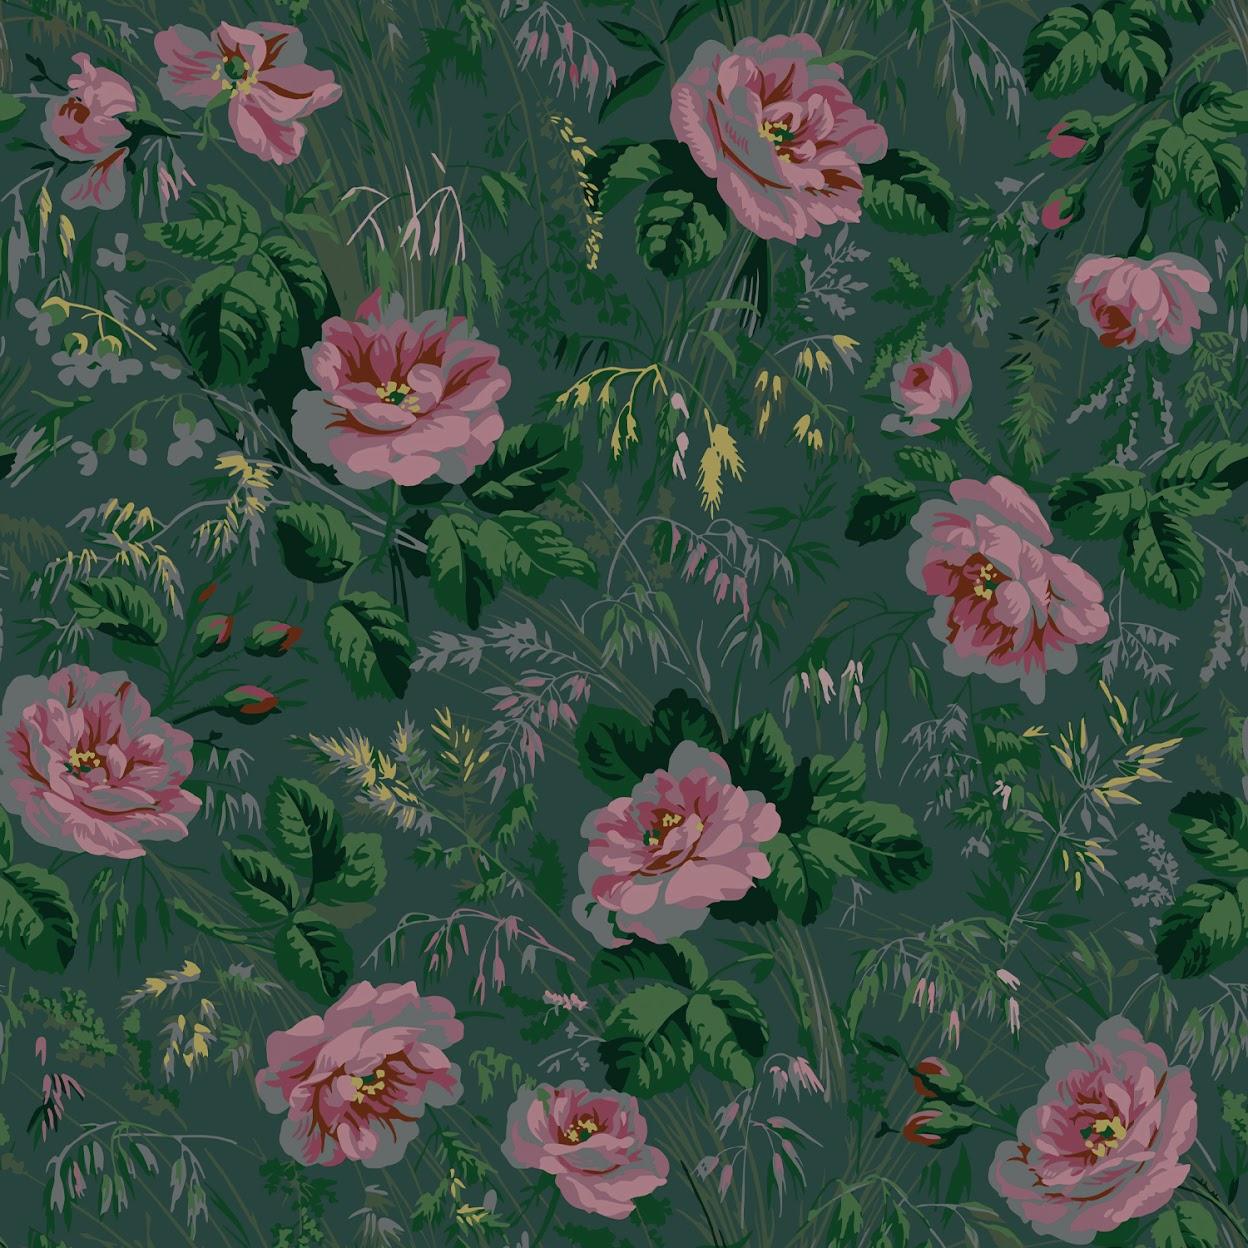 French 'Roses de Monet‘ wallpaper by Papier Français, collection BNF N°1 For Sale